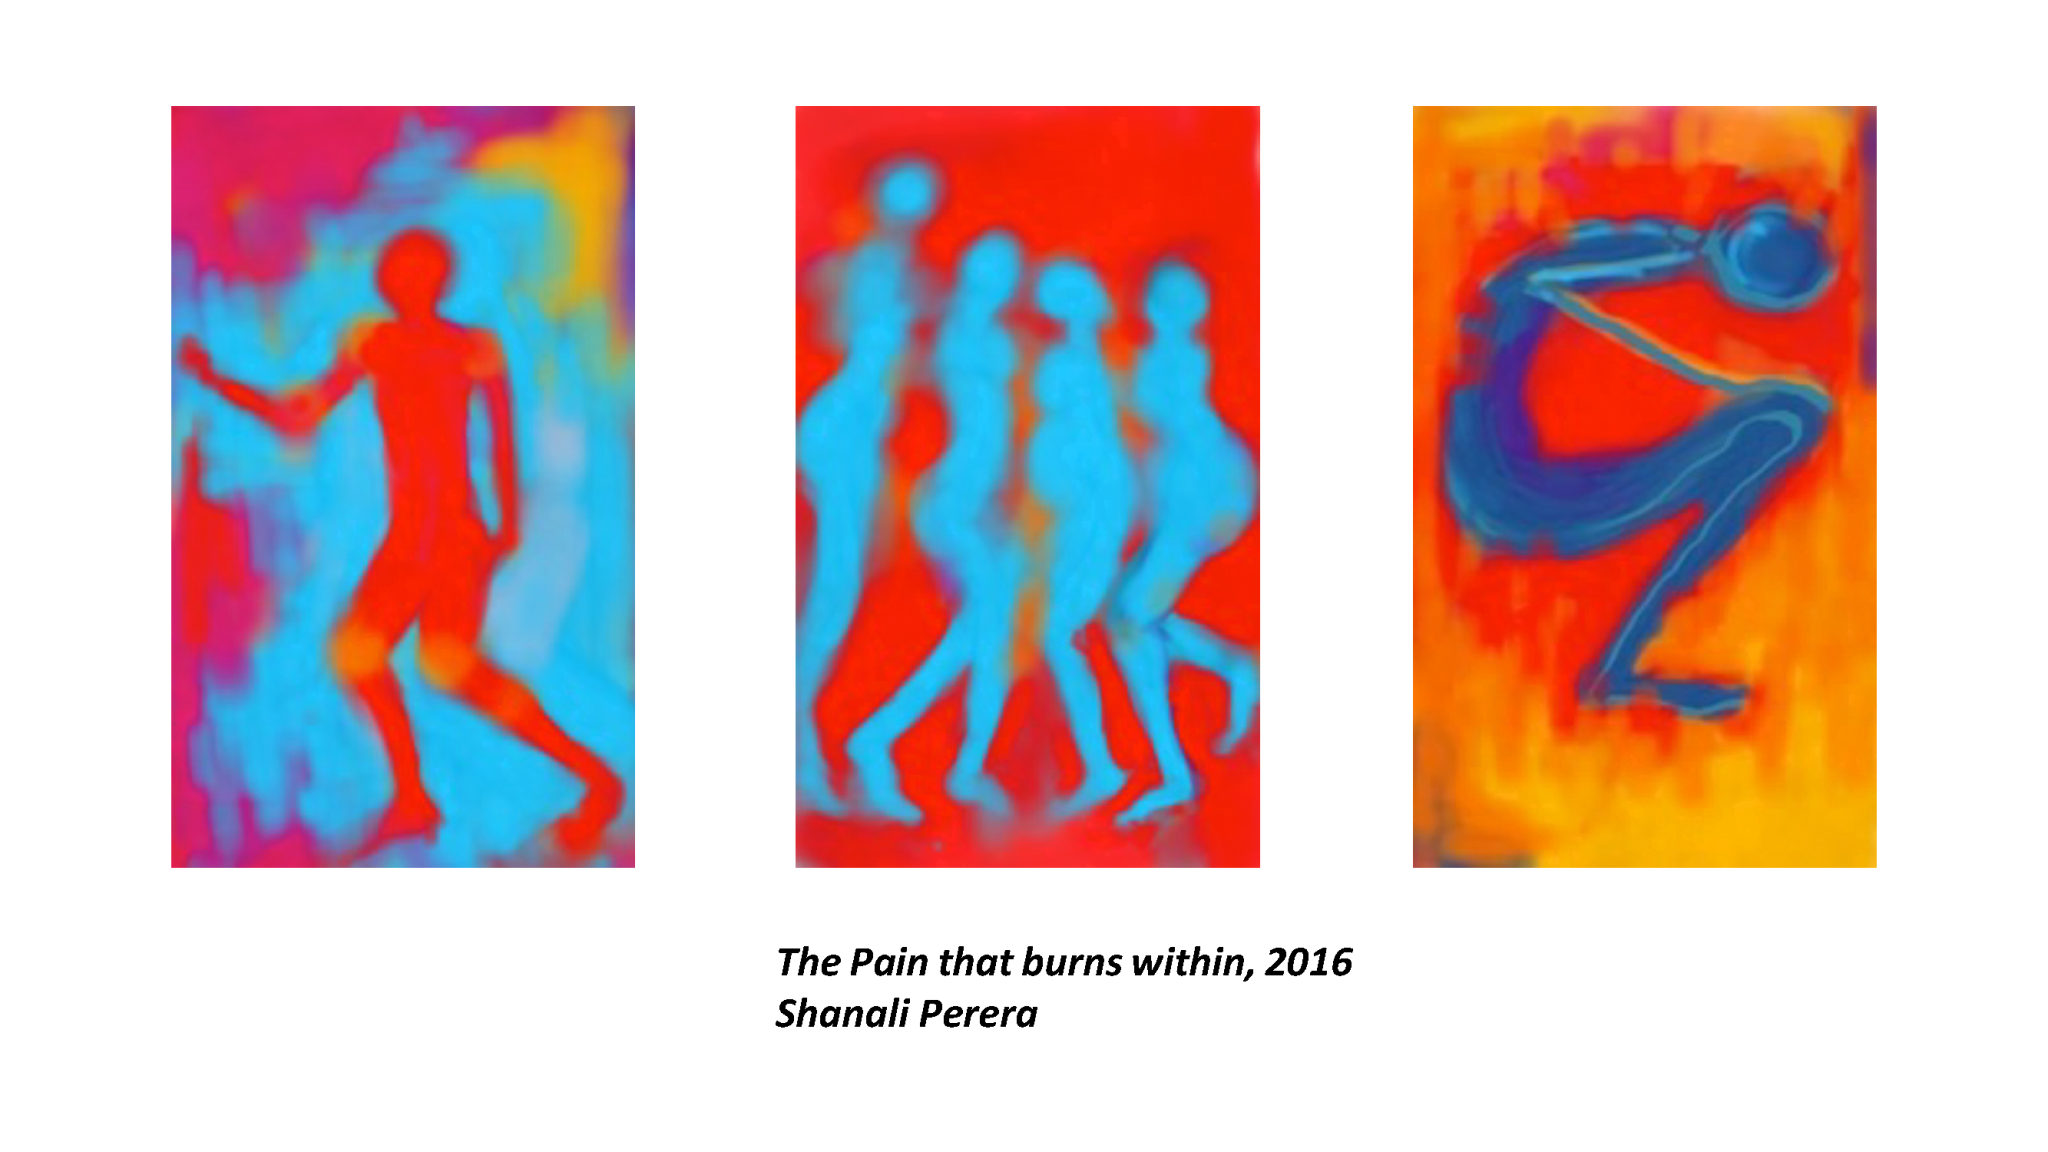 The pain that burns within, Shanali Perera, 2016